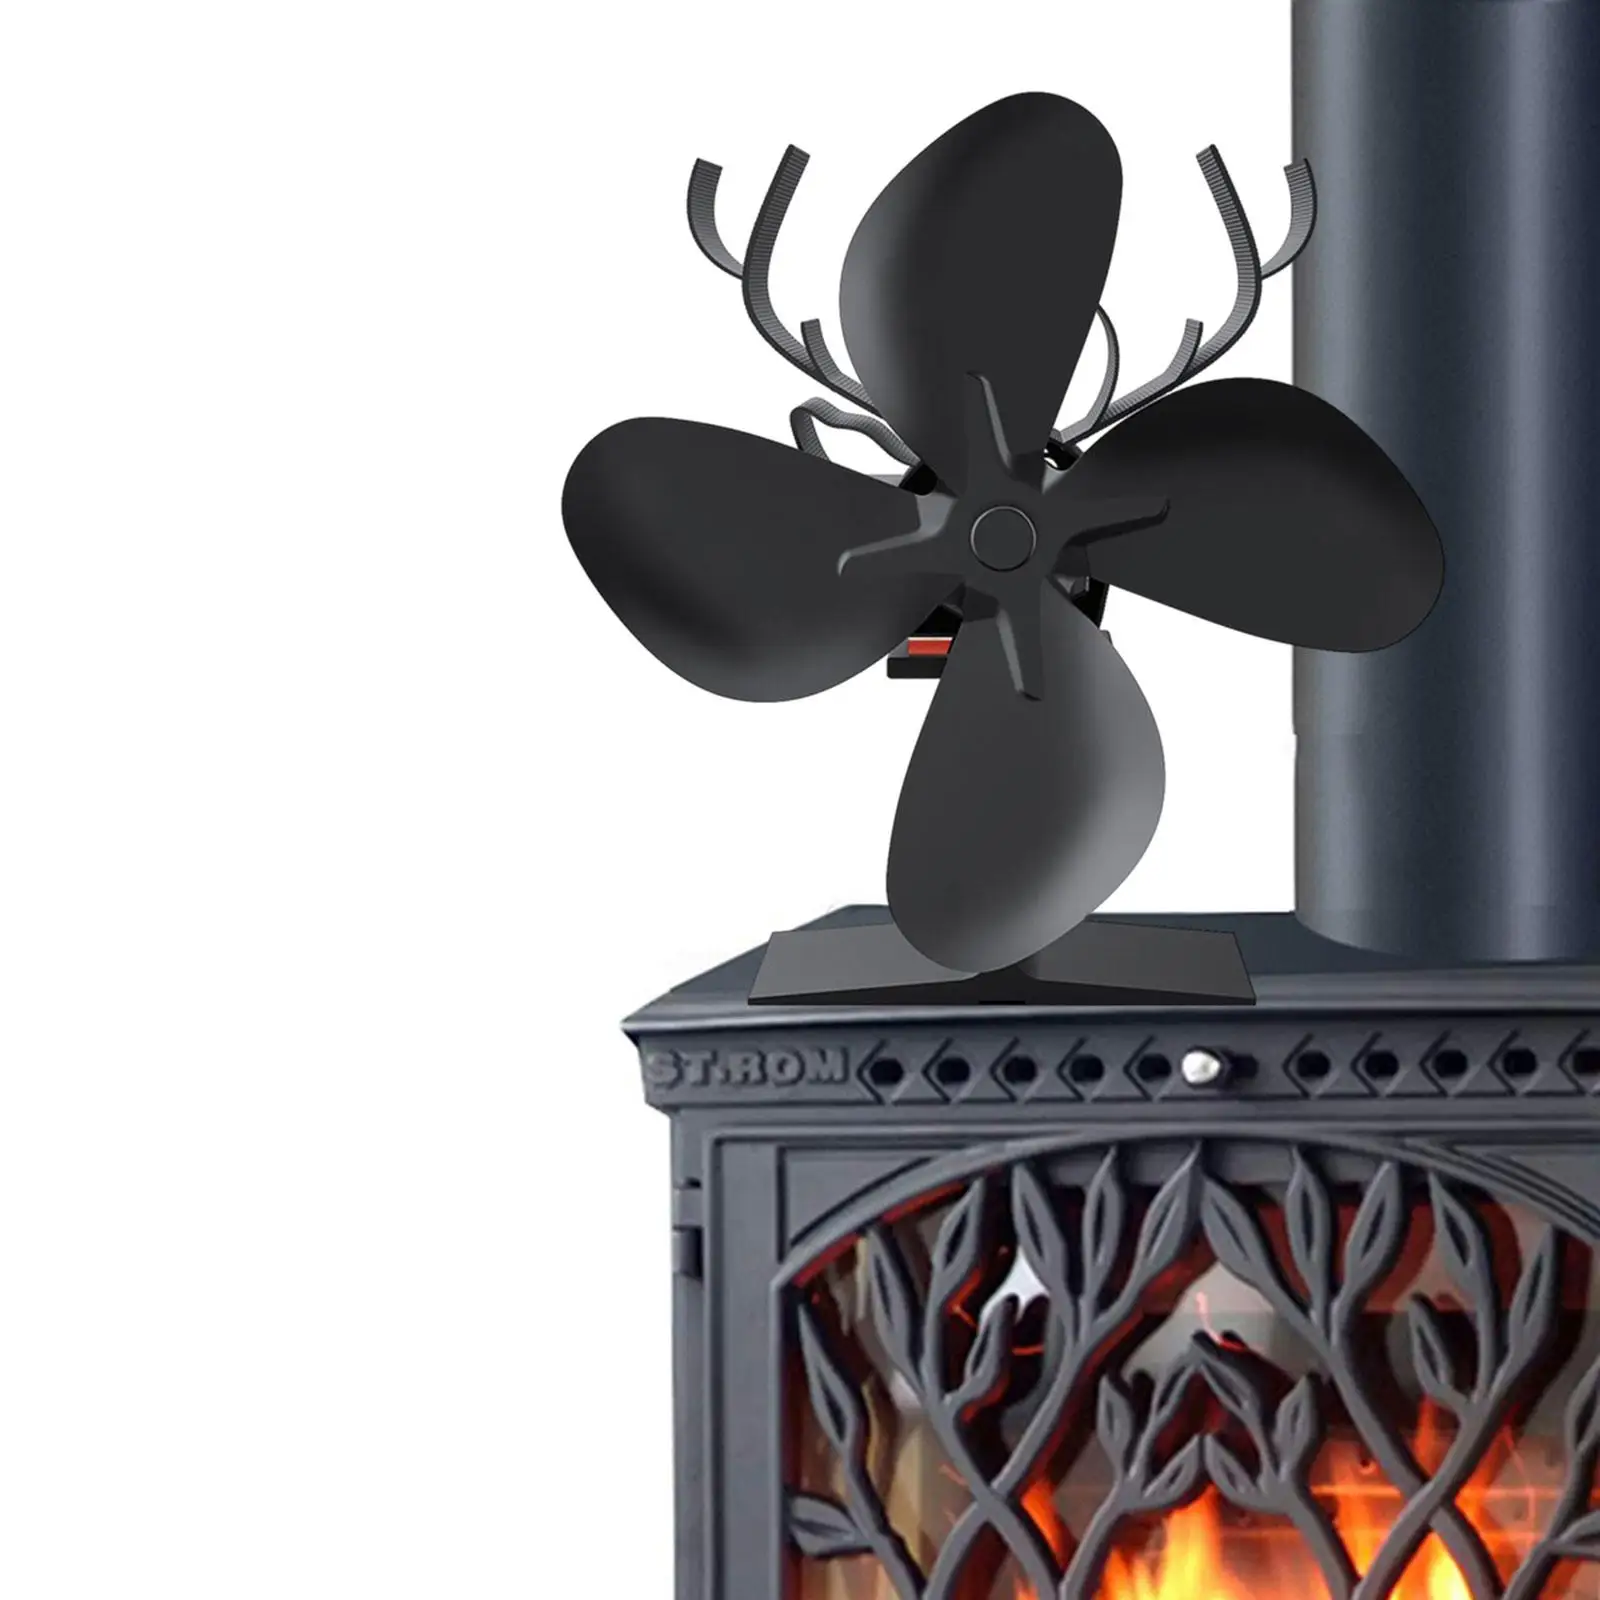 Xmas Wood Burner Fireplace Fan Logs Stove Fan, Heat Powered 18x9x18cm Multipurpose Eco Friendly Silent Running Black Color